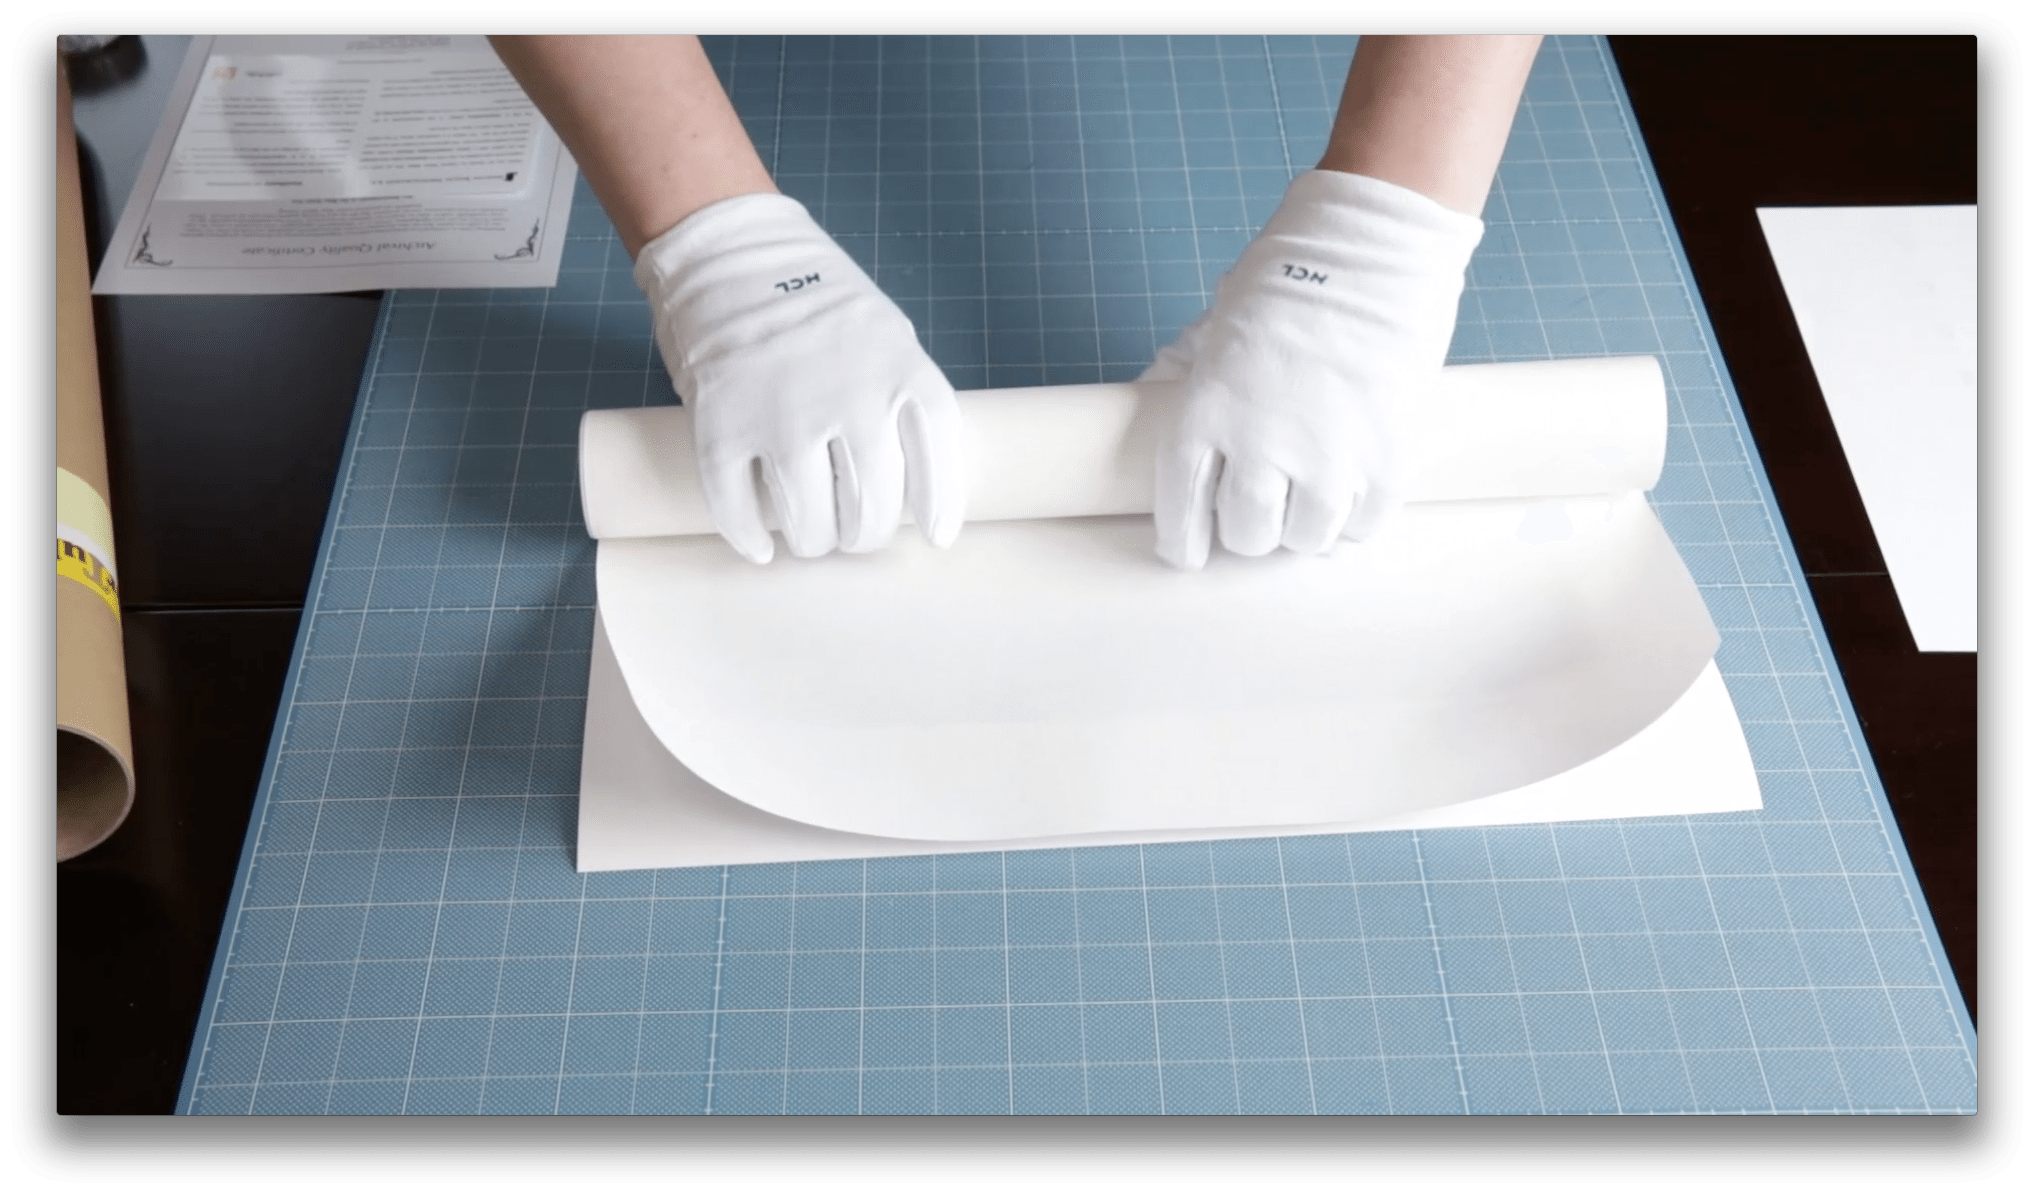 Buffered Acid-Free Interleaving Tissue Paper